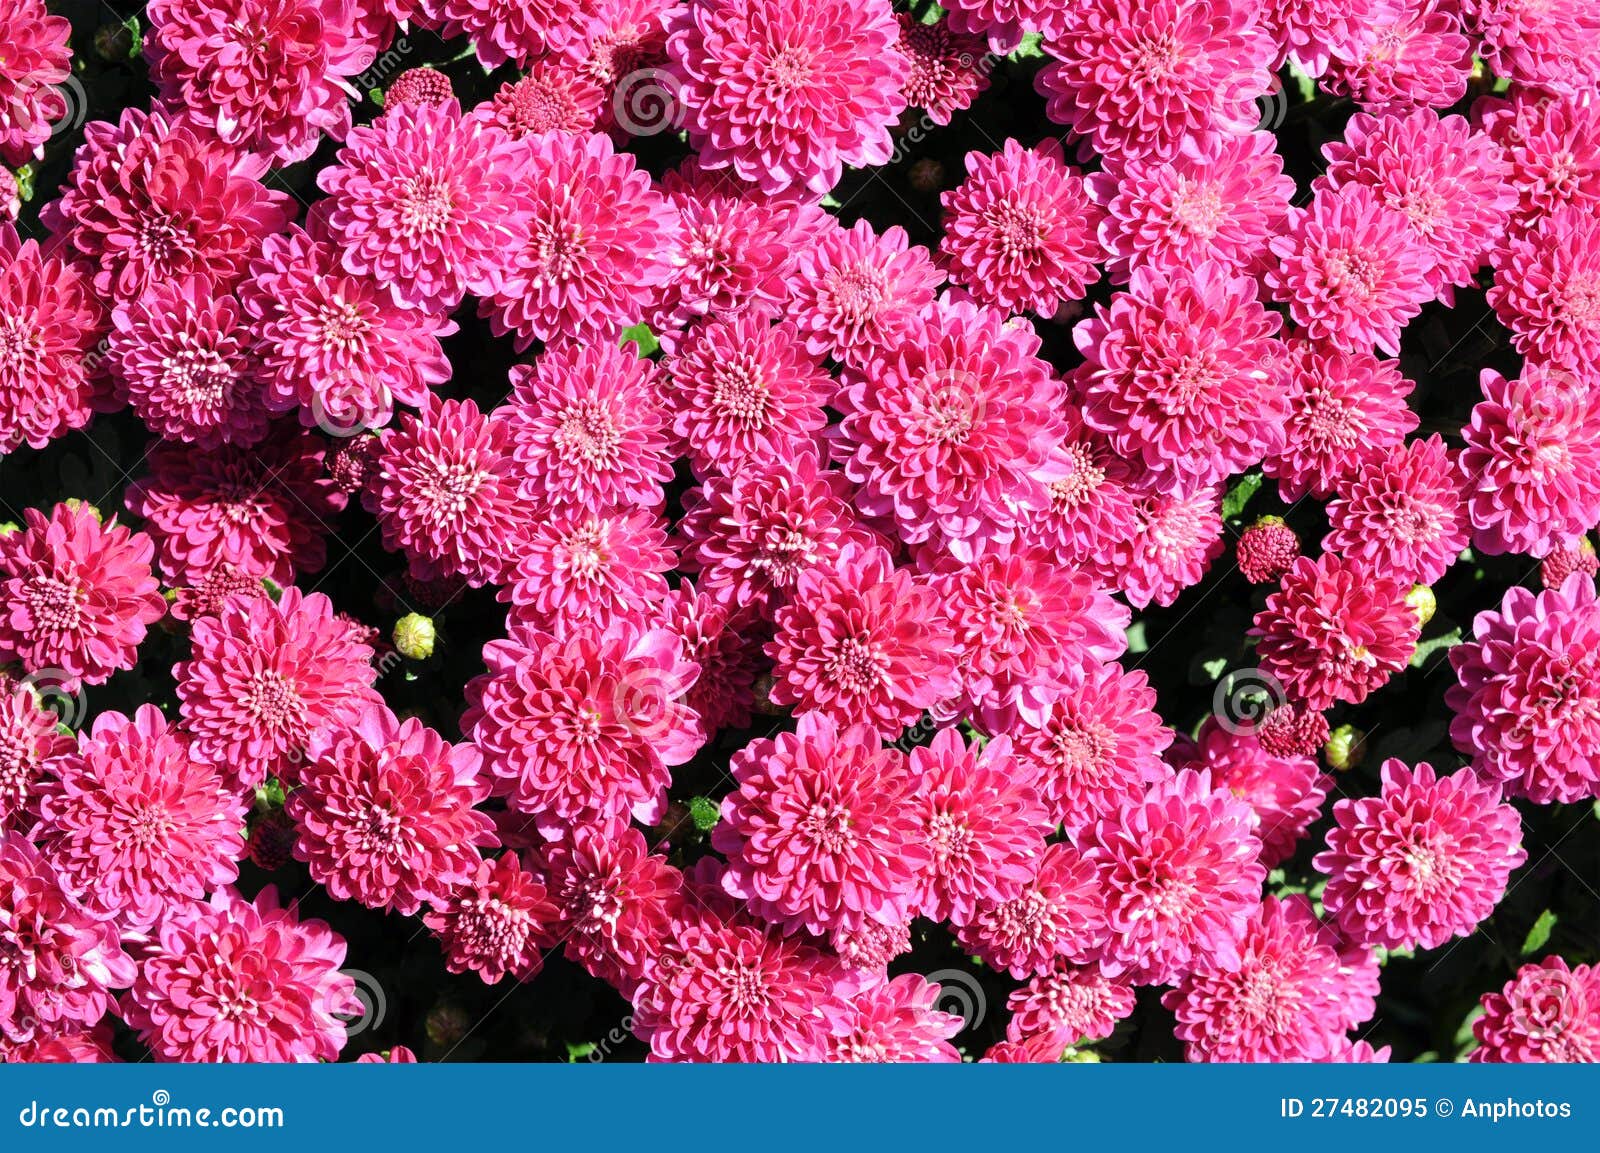 Mum flower stock image. Image of background, season, garden - 27482095